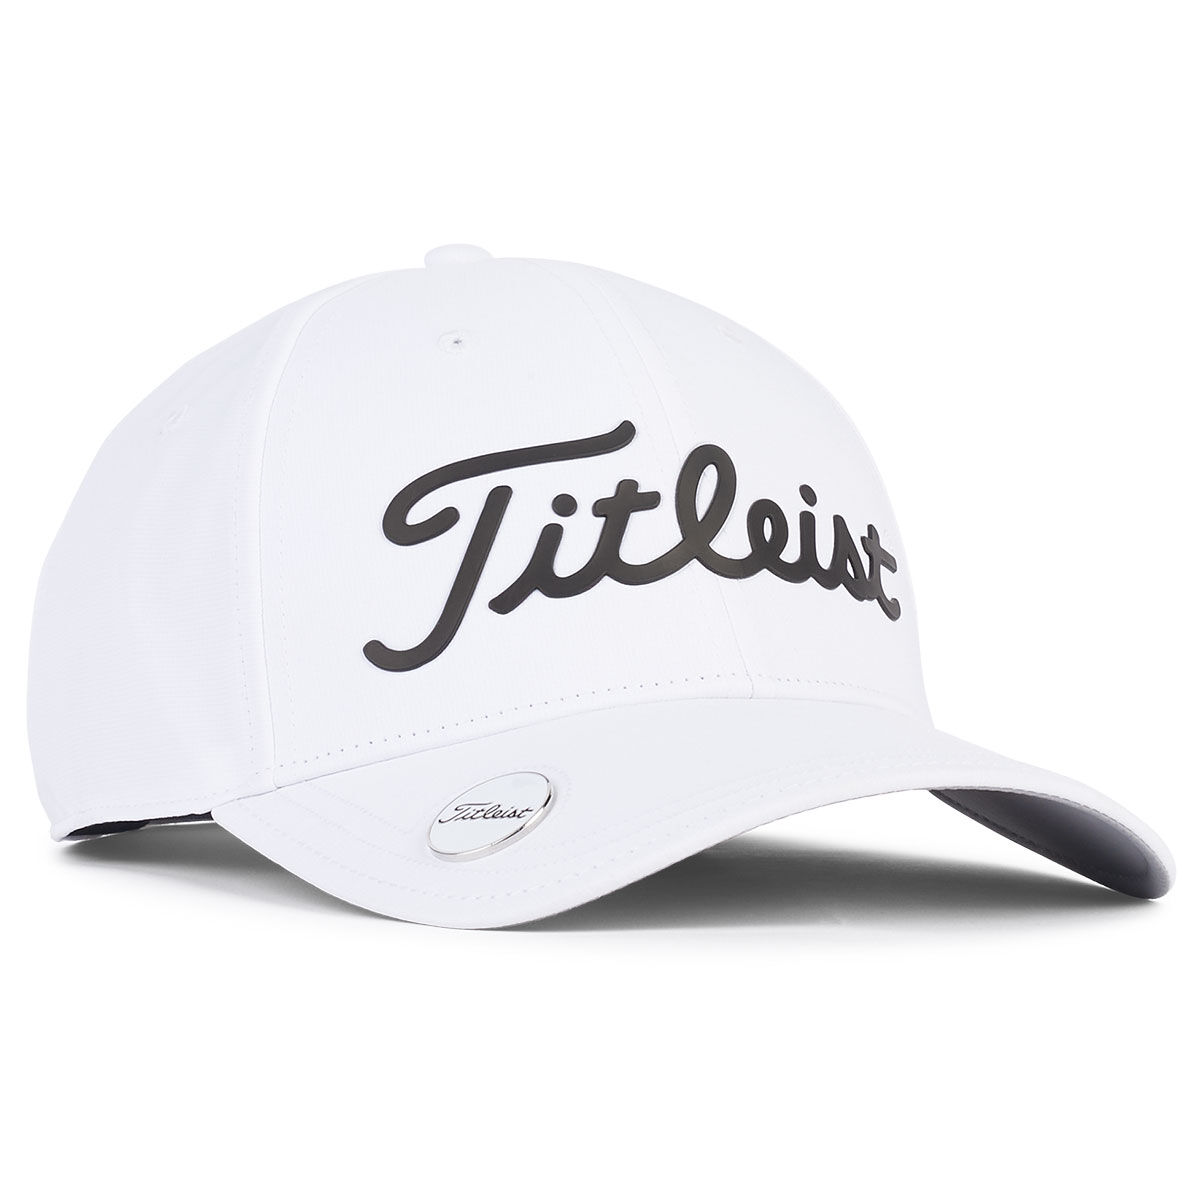 Titleist Men’s White and Black Lightweight Performance Ball Marker Golf Cap | American Golf, One Size